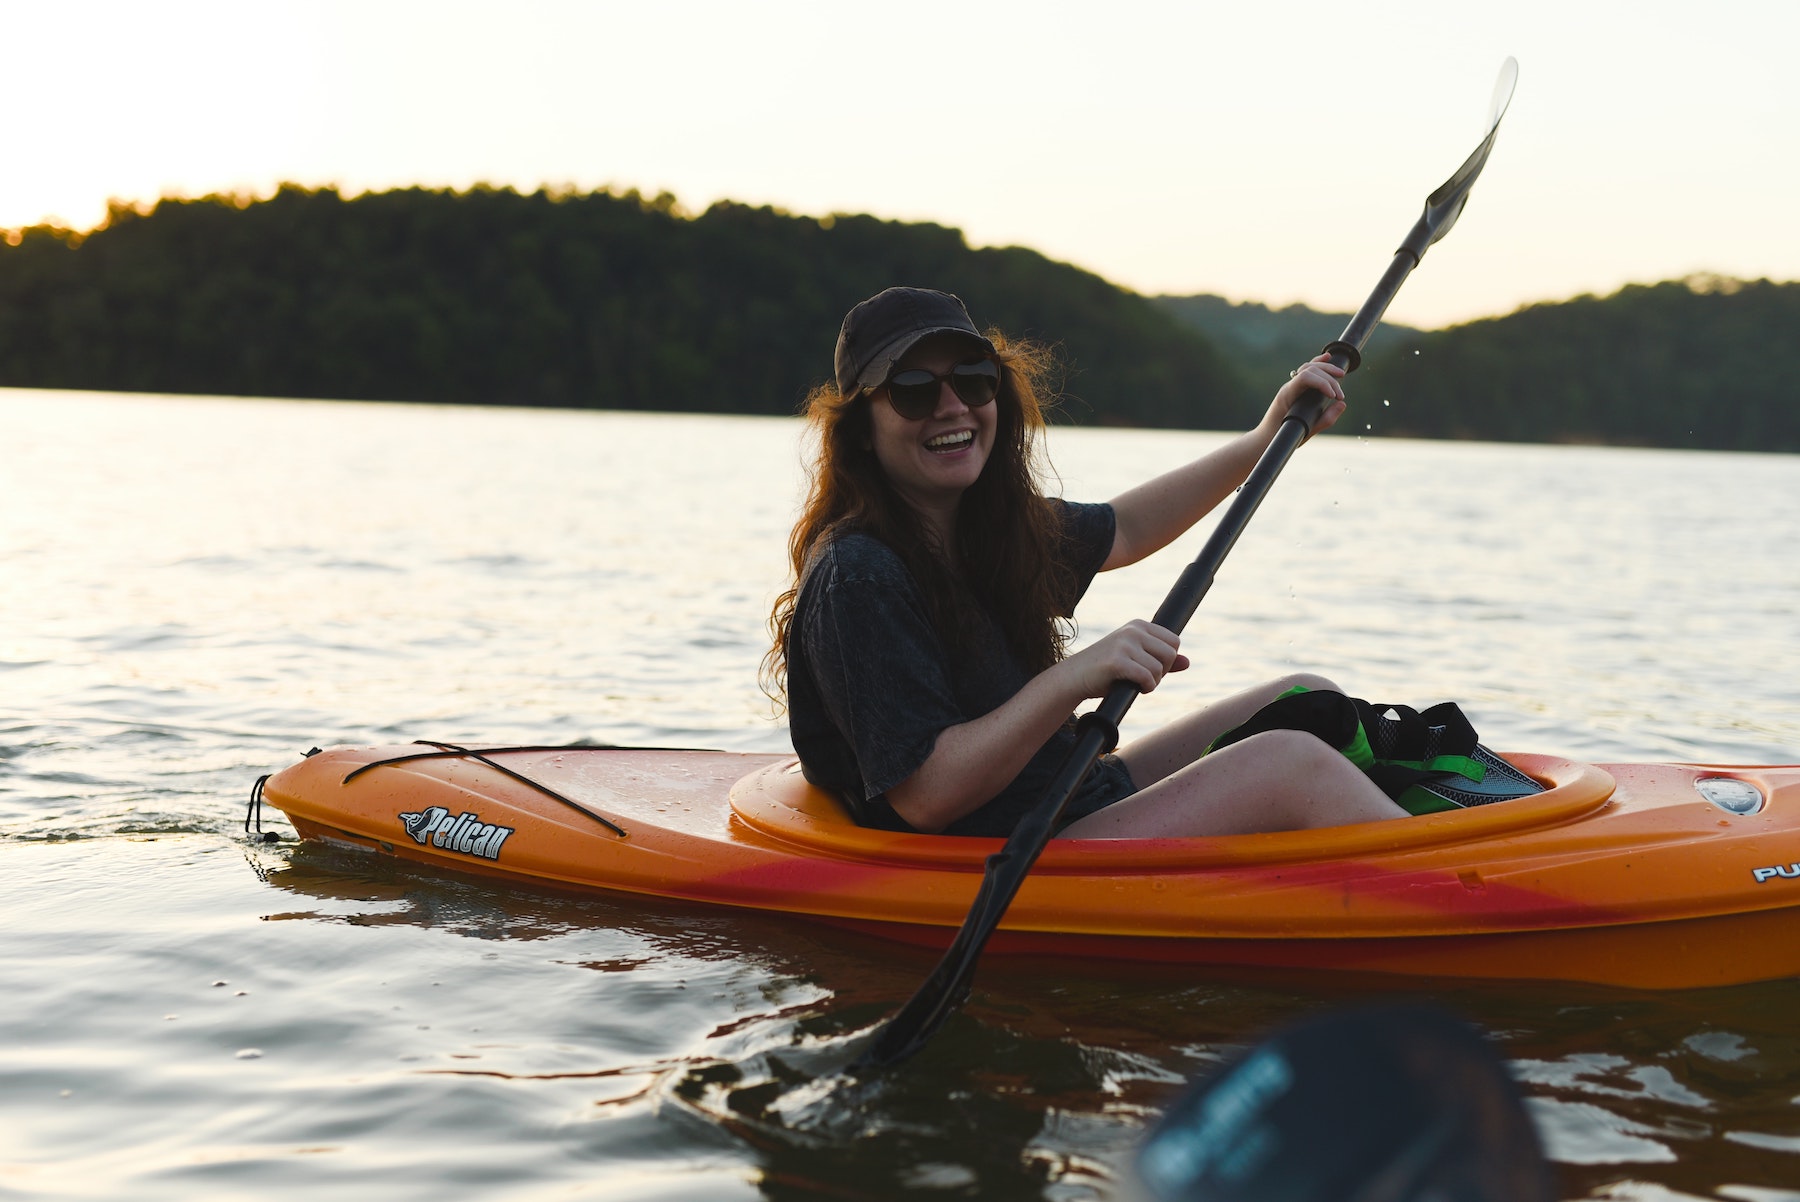 WIIN kayaker female smiling